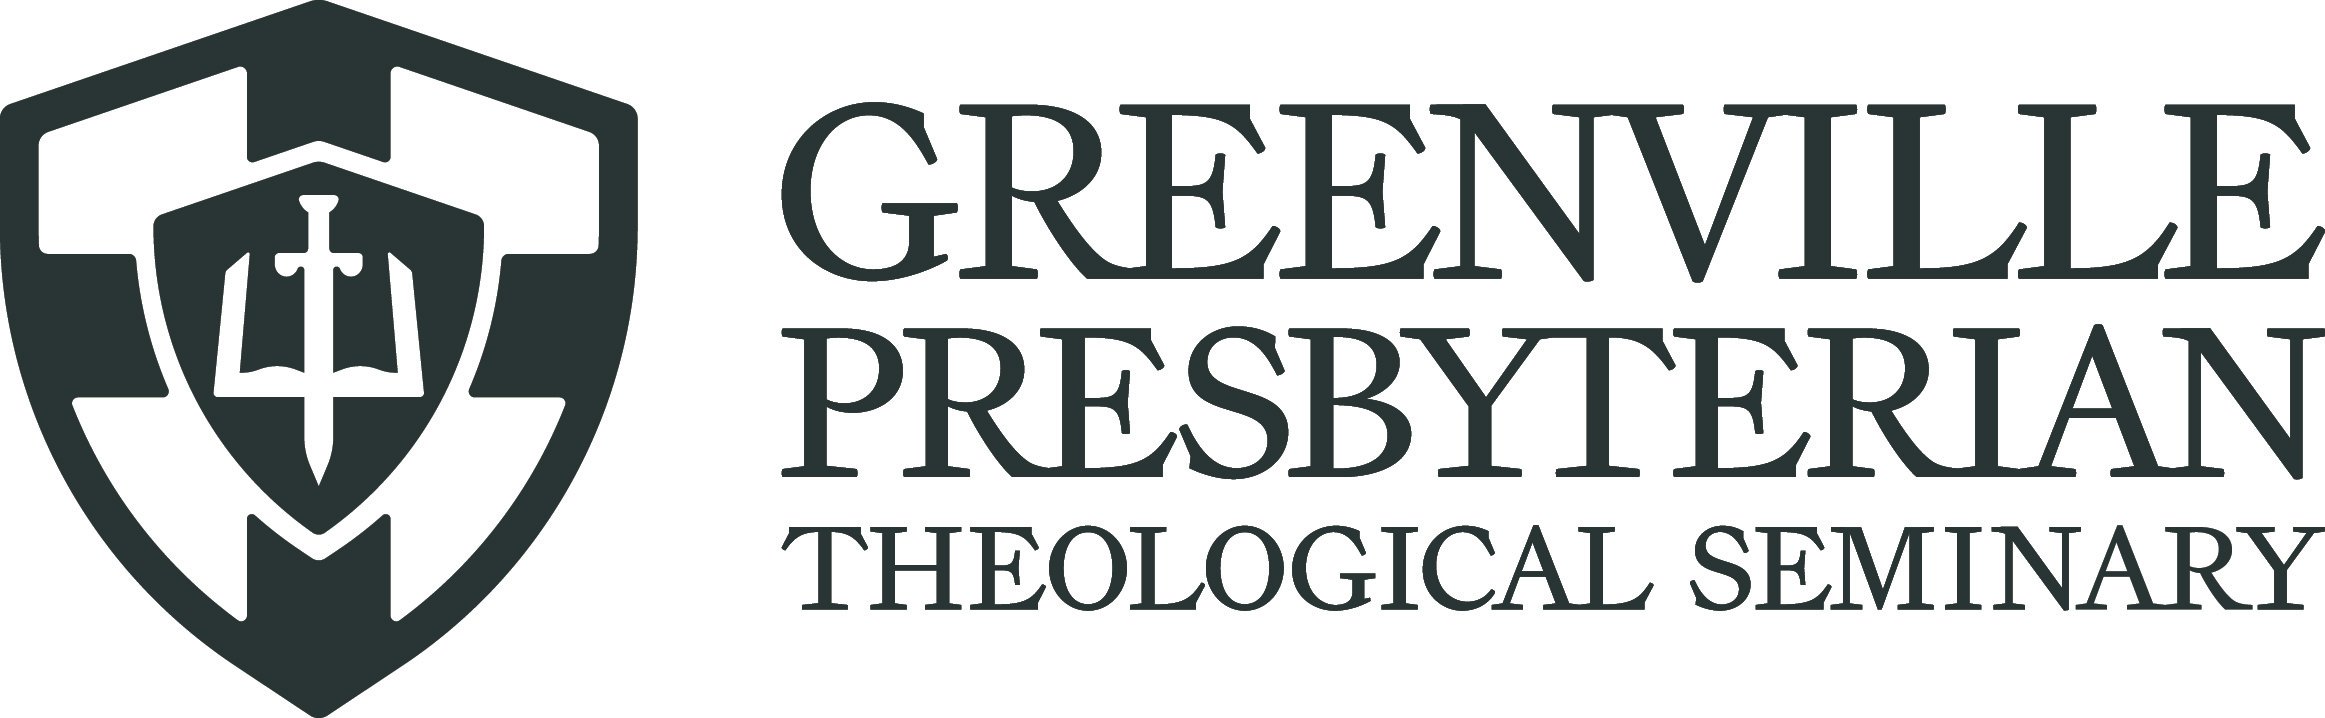 Greenville Presbyterian Theology Seminary.jpg